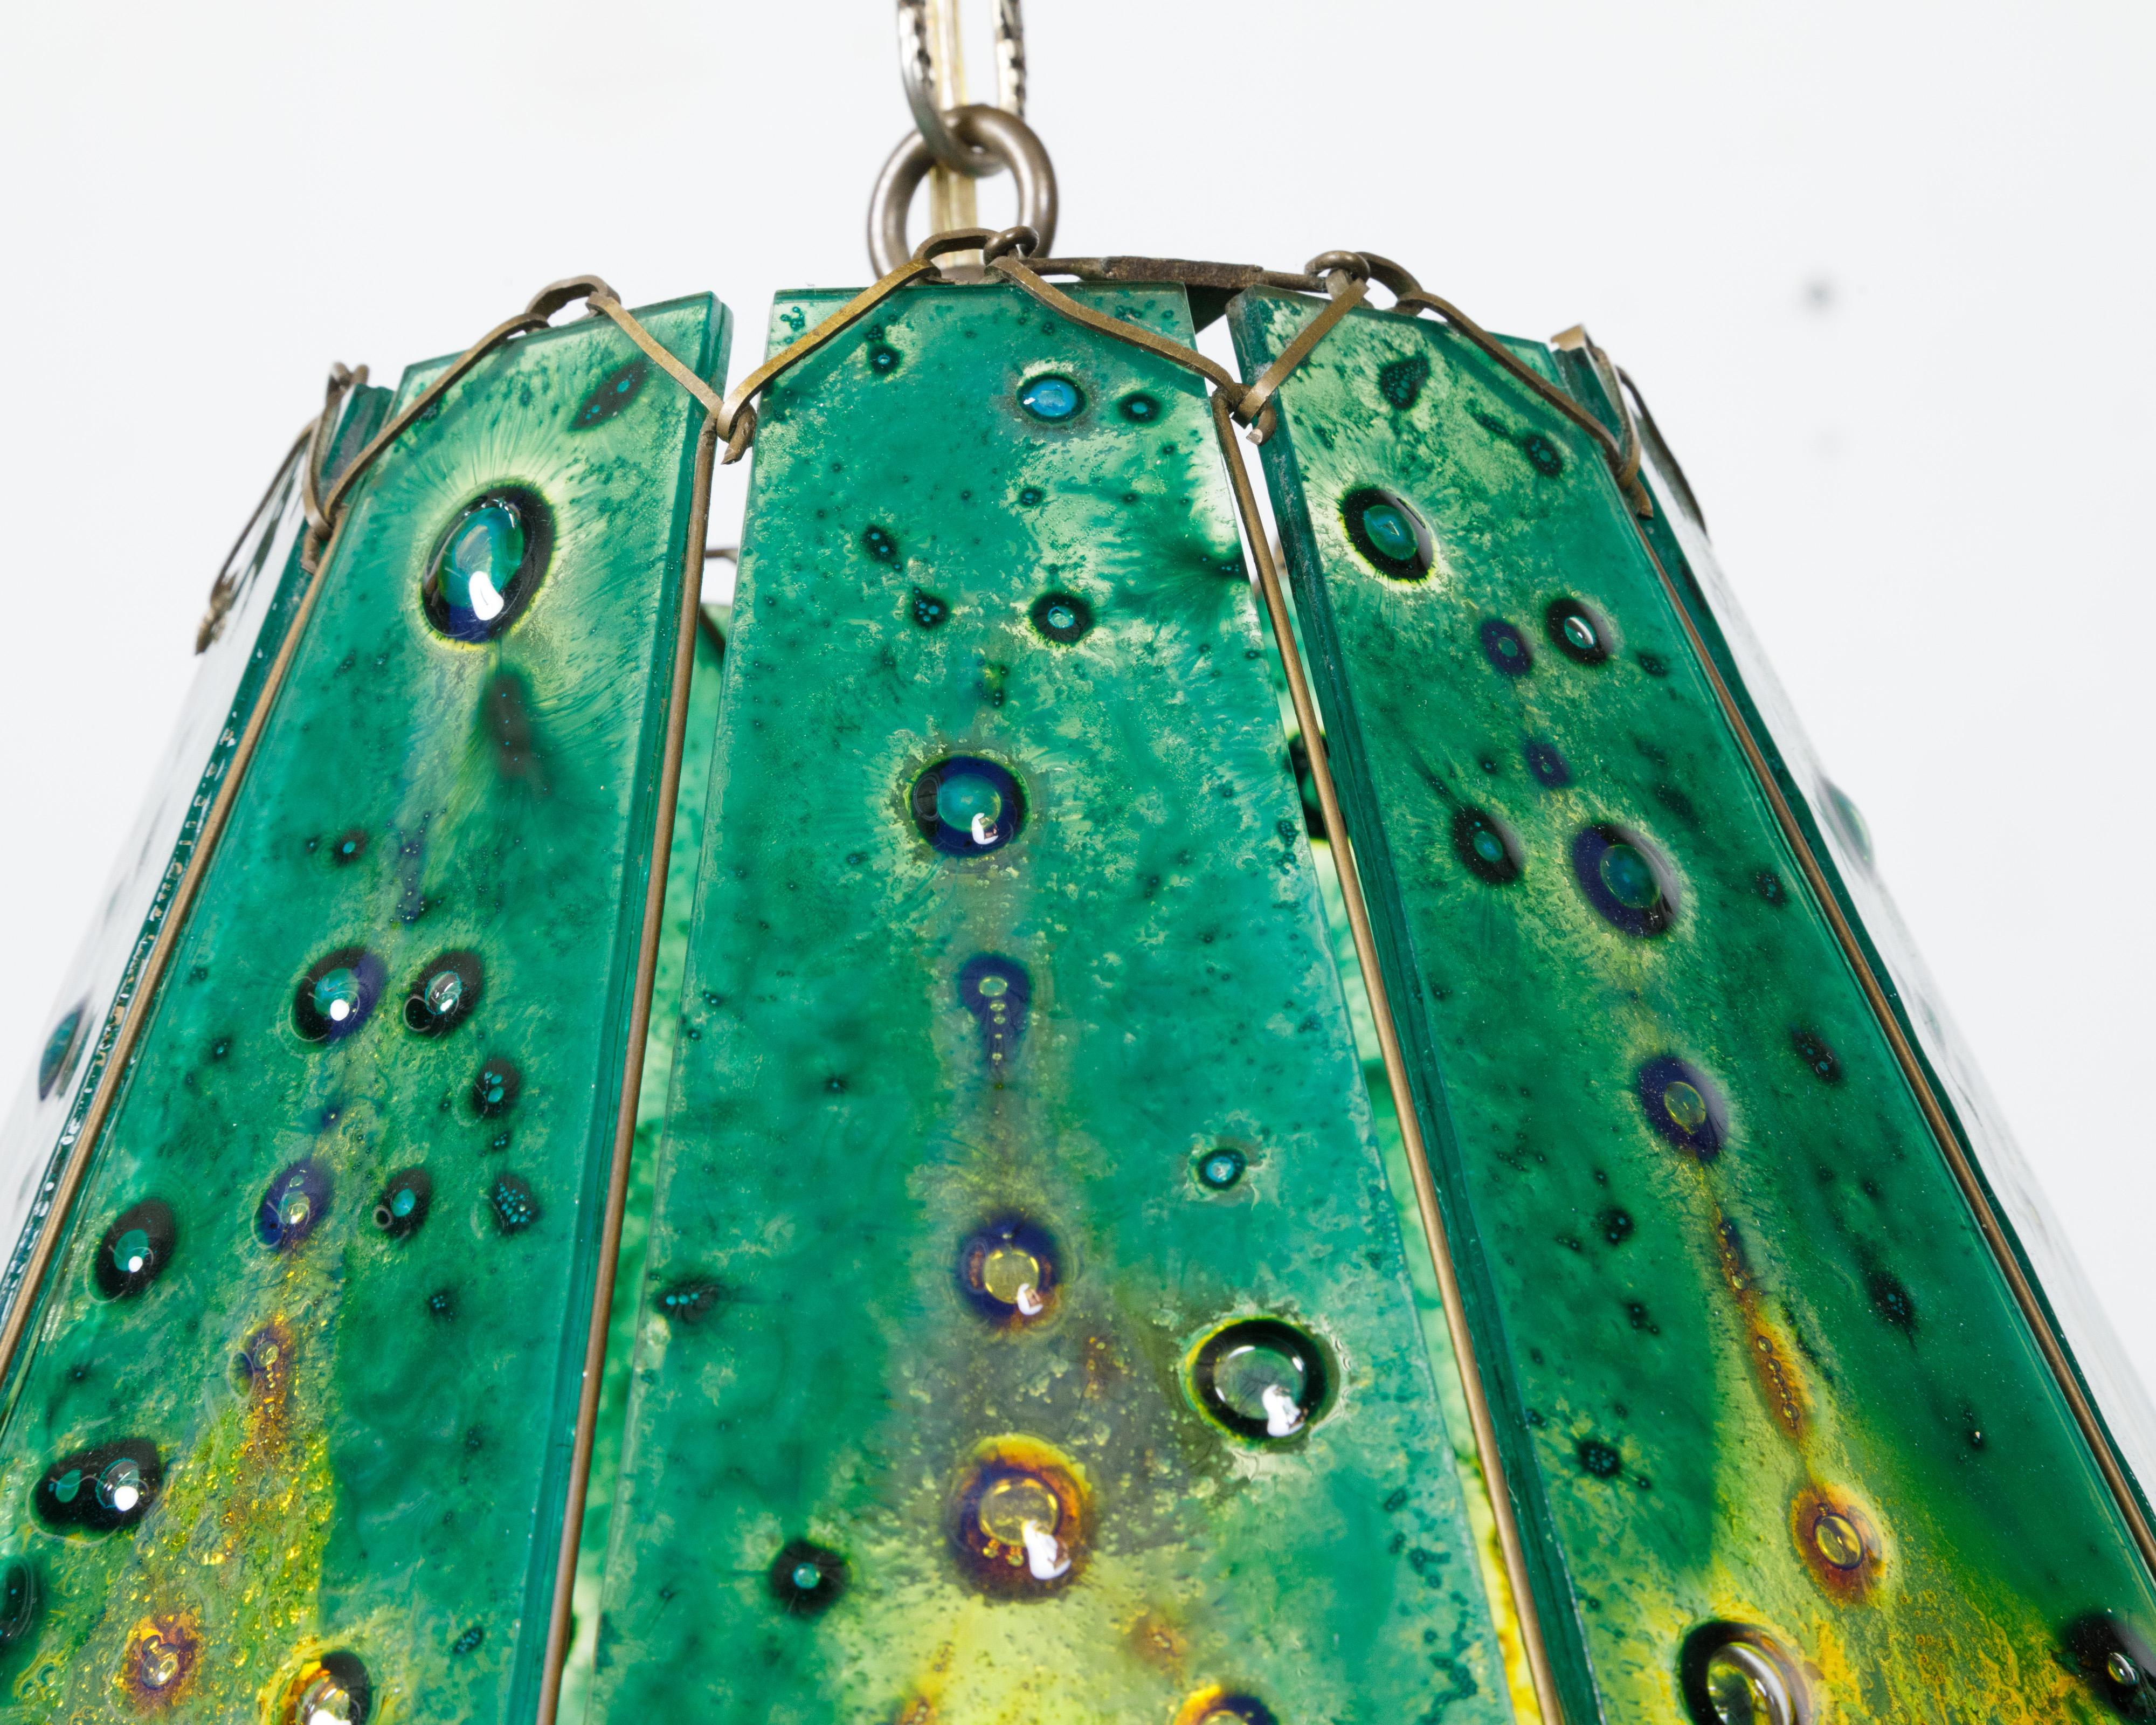 Mid-Century Modern Felipe Derflingher Art Glass Pendant Light Fixture with Green and Yellow Tones For Sale